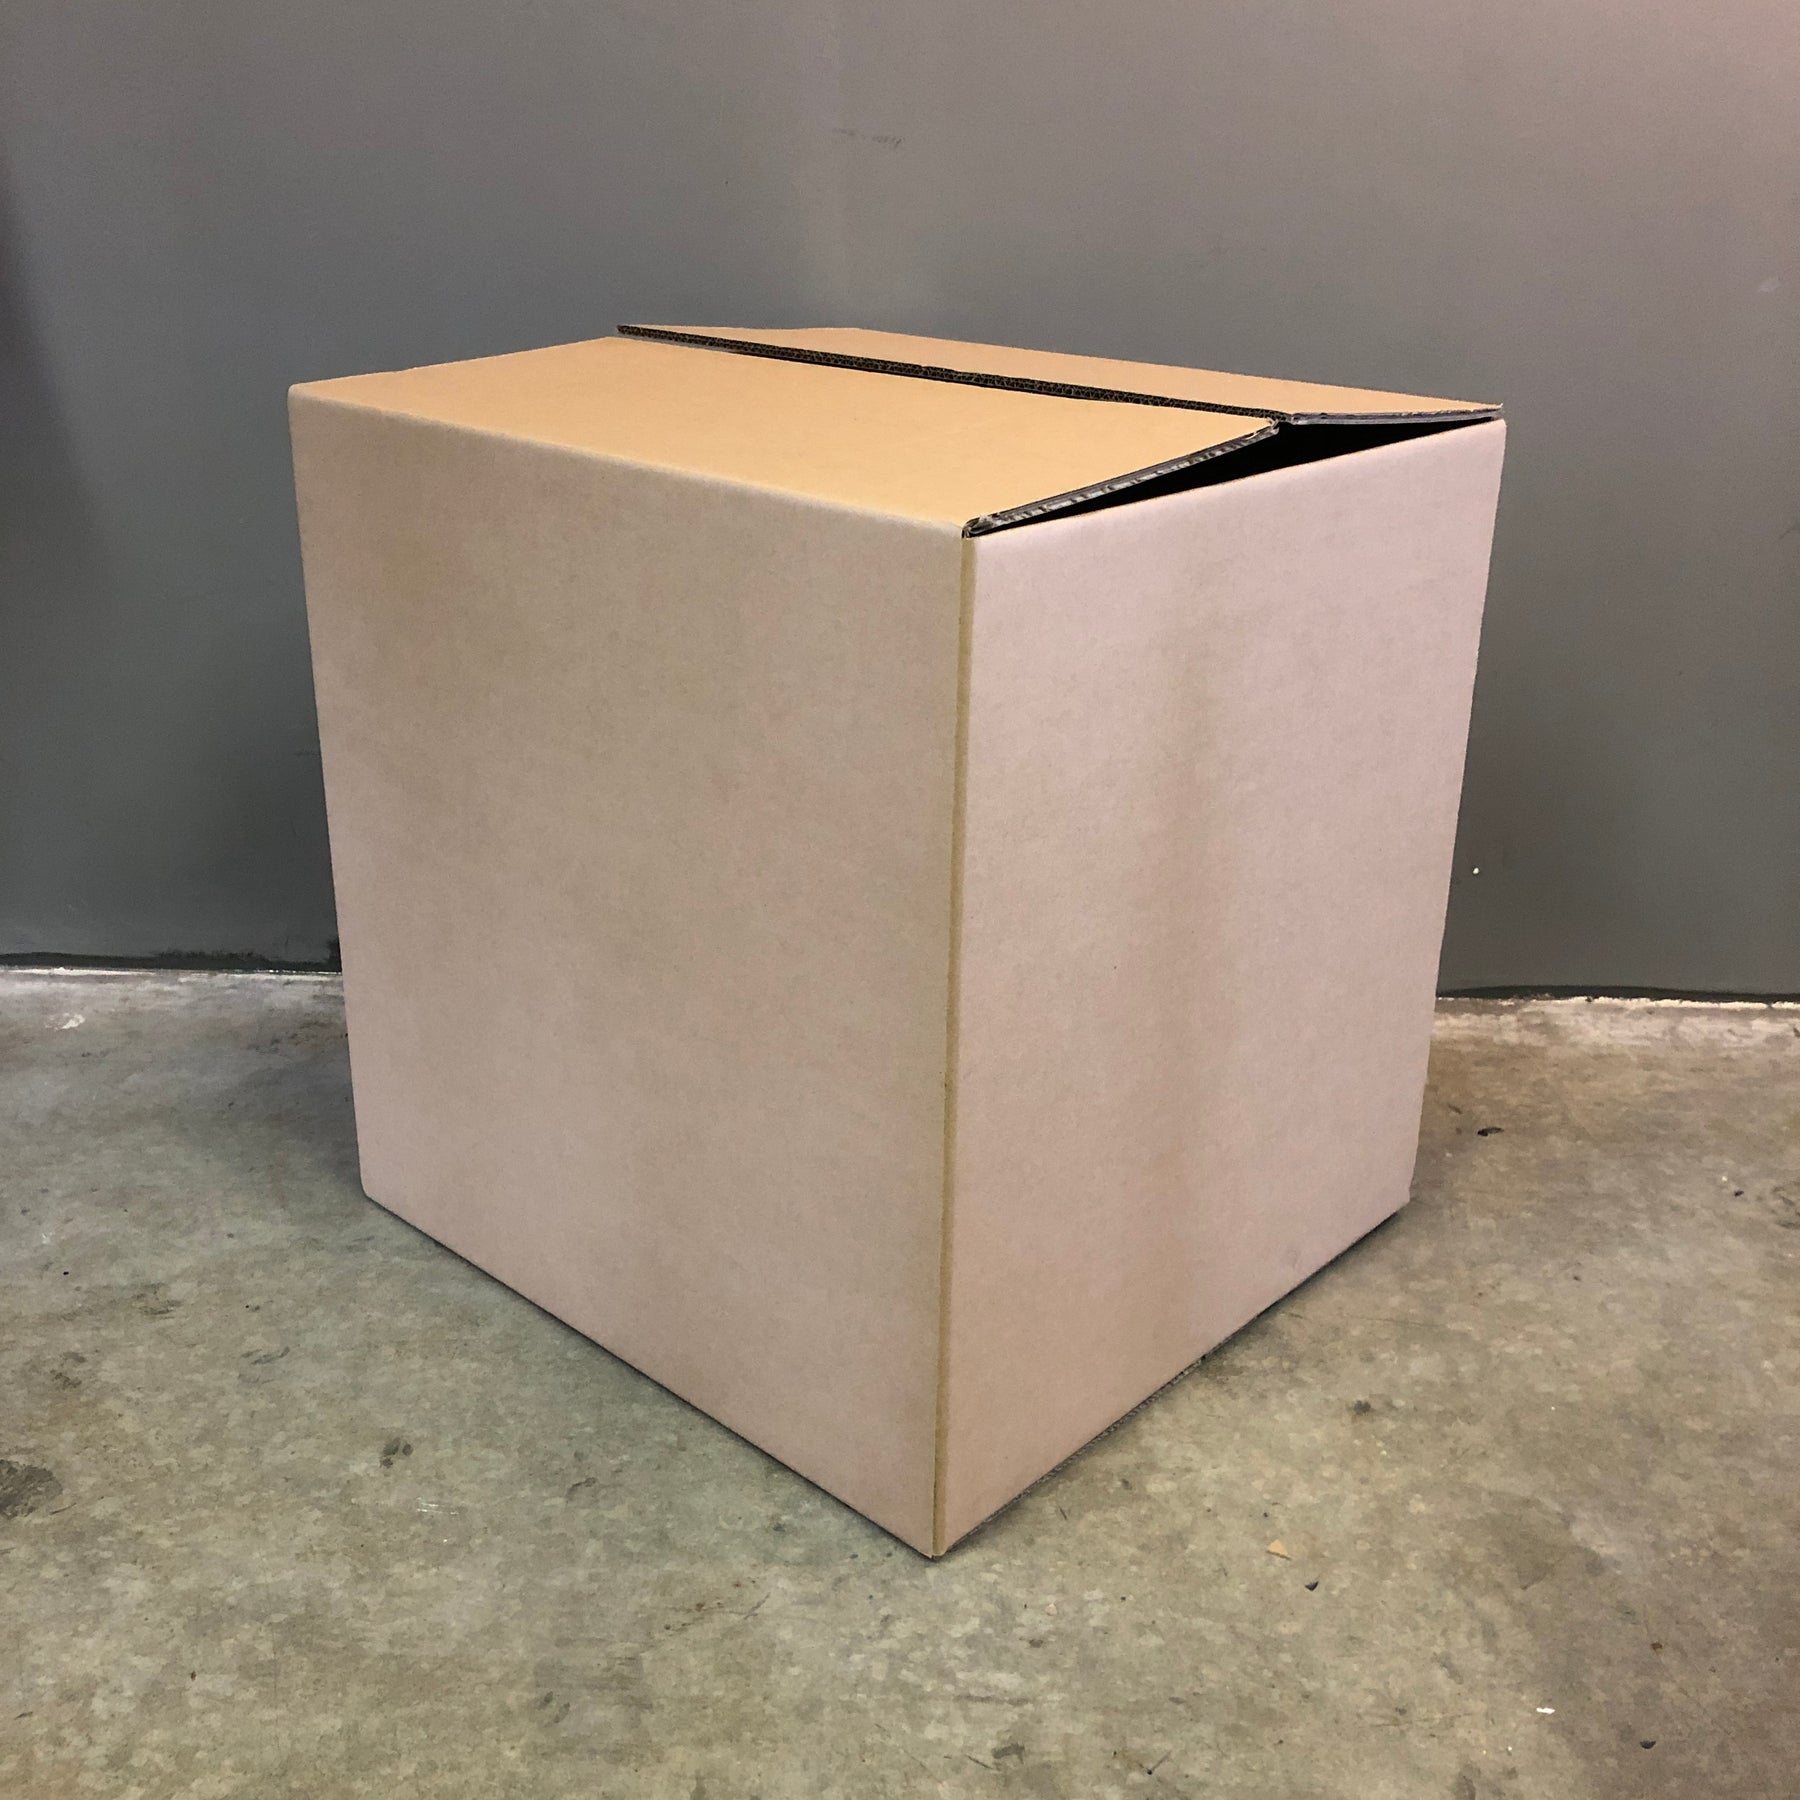 Large Packing Box